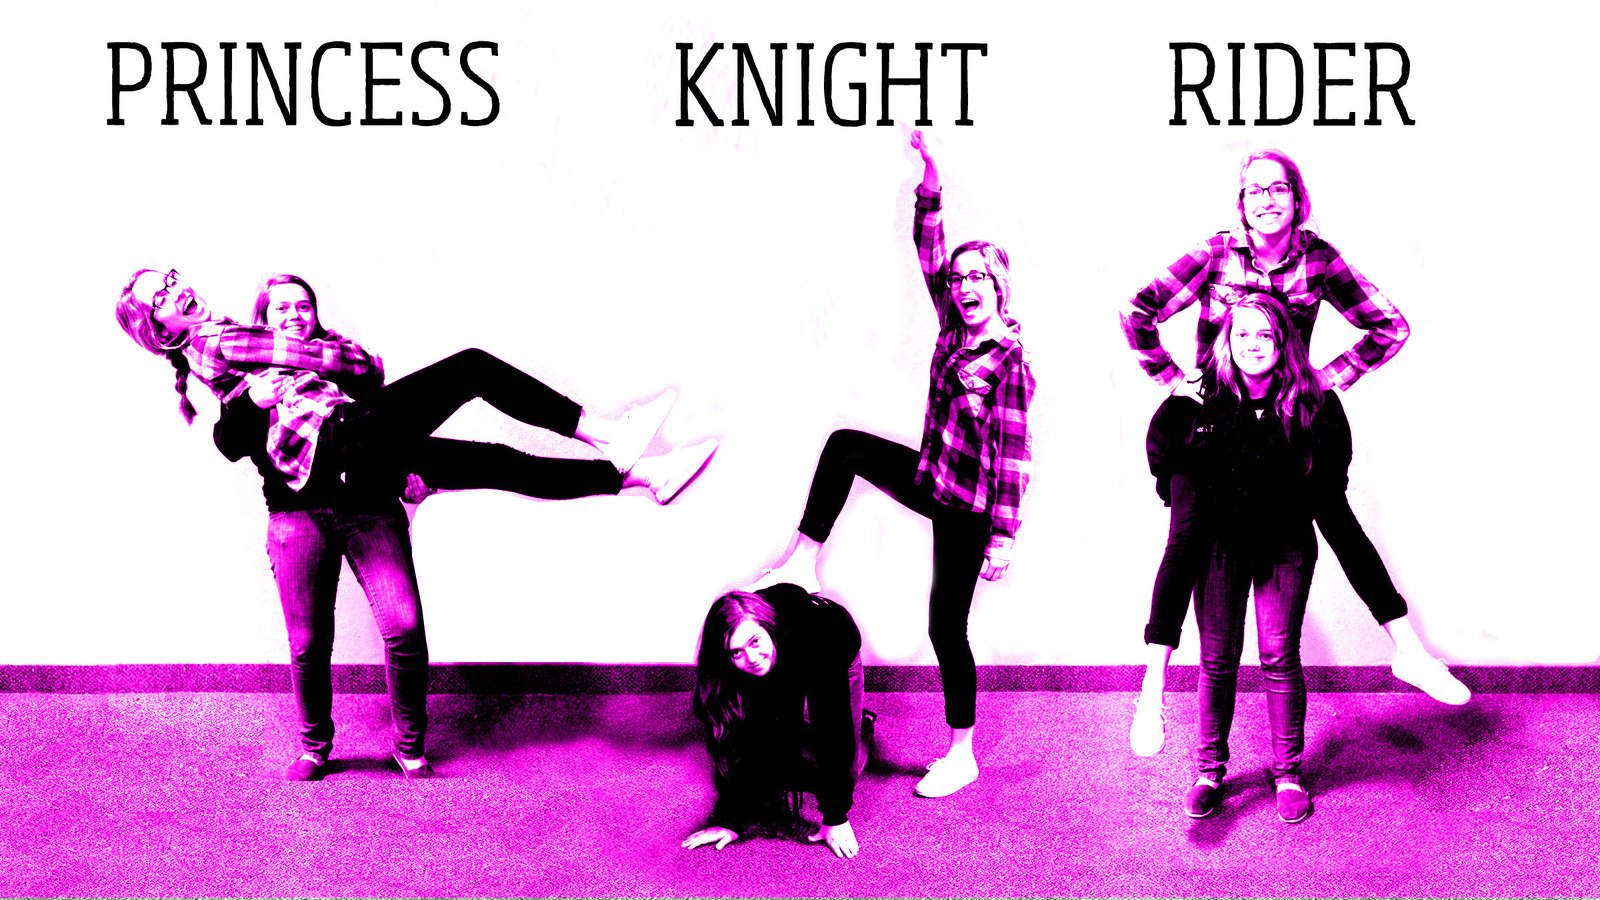 Princess Knight Rider - Youth DownloadsYouth Downloads